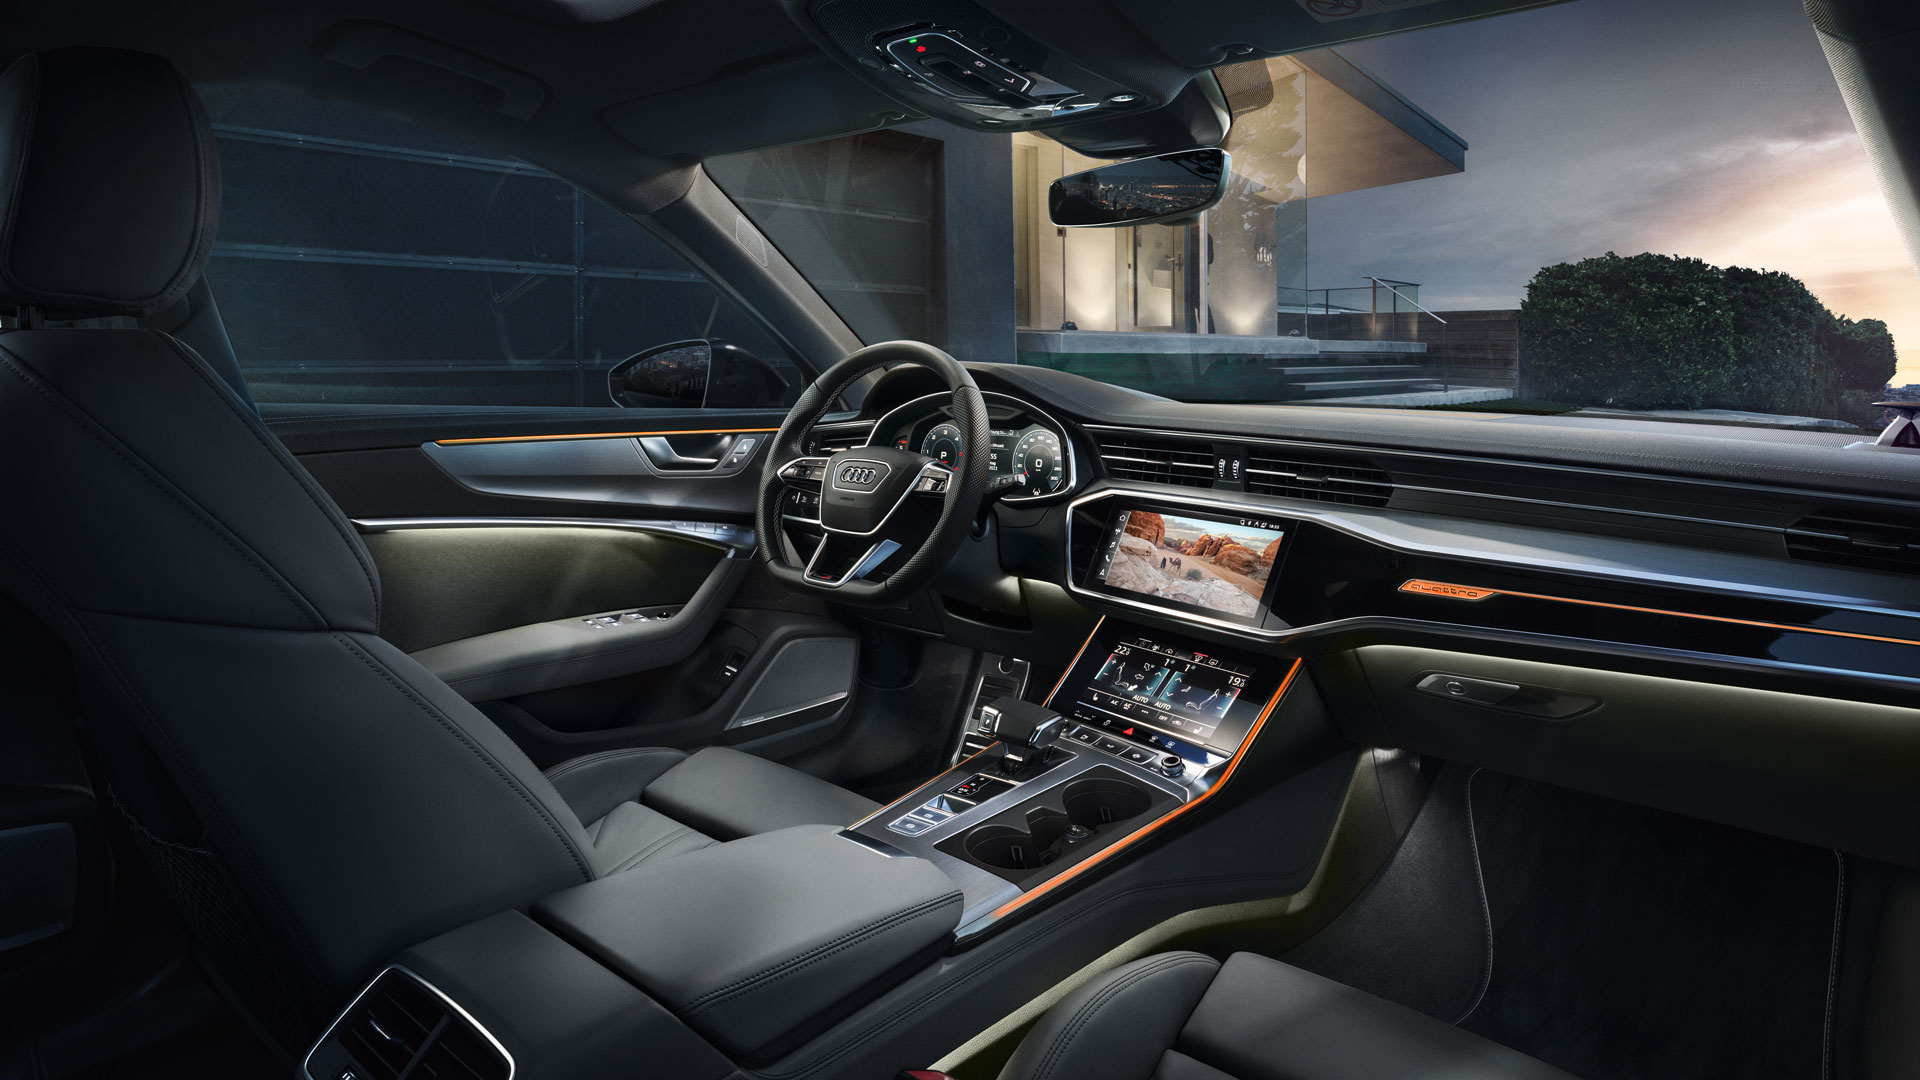 An Audi MMI interior lighting theme that looks like a desert shown within an Audi vehicle. 